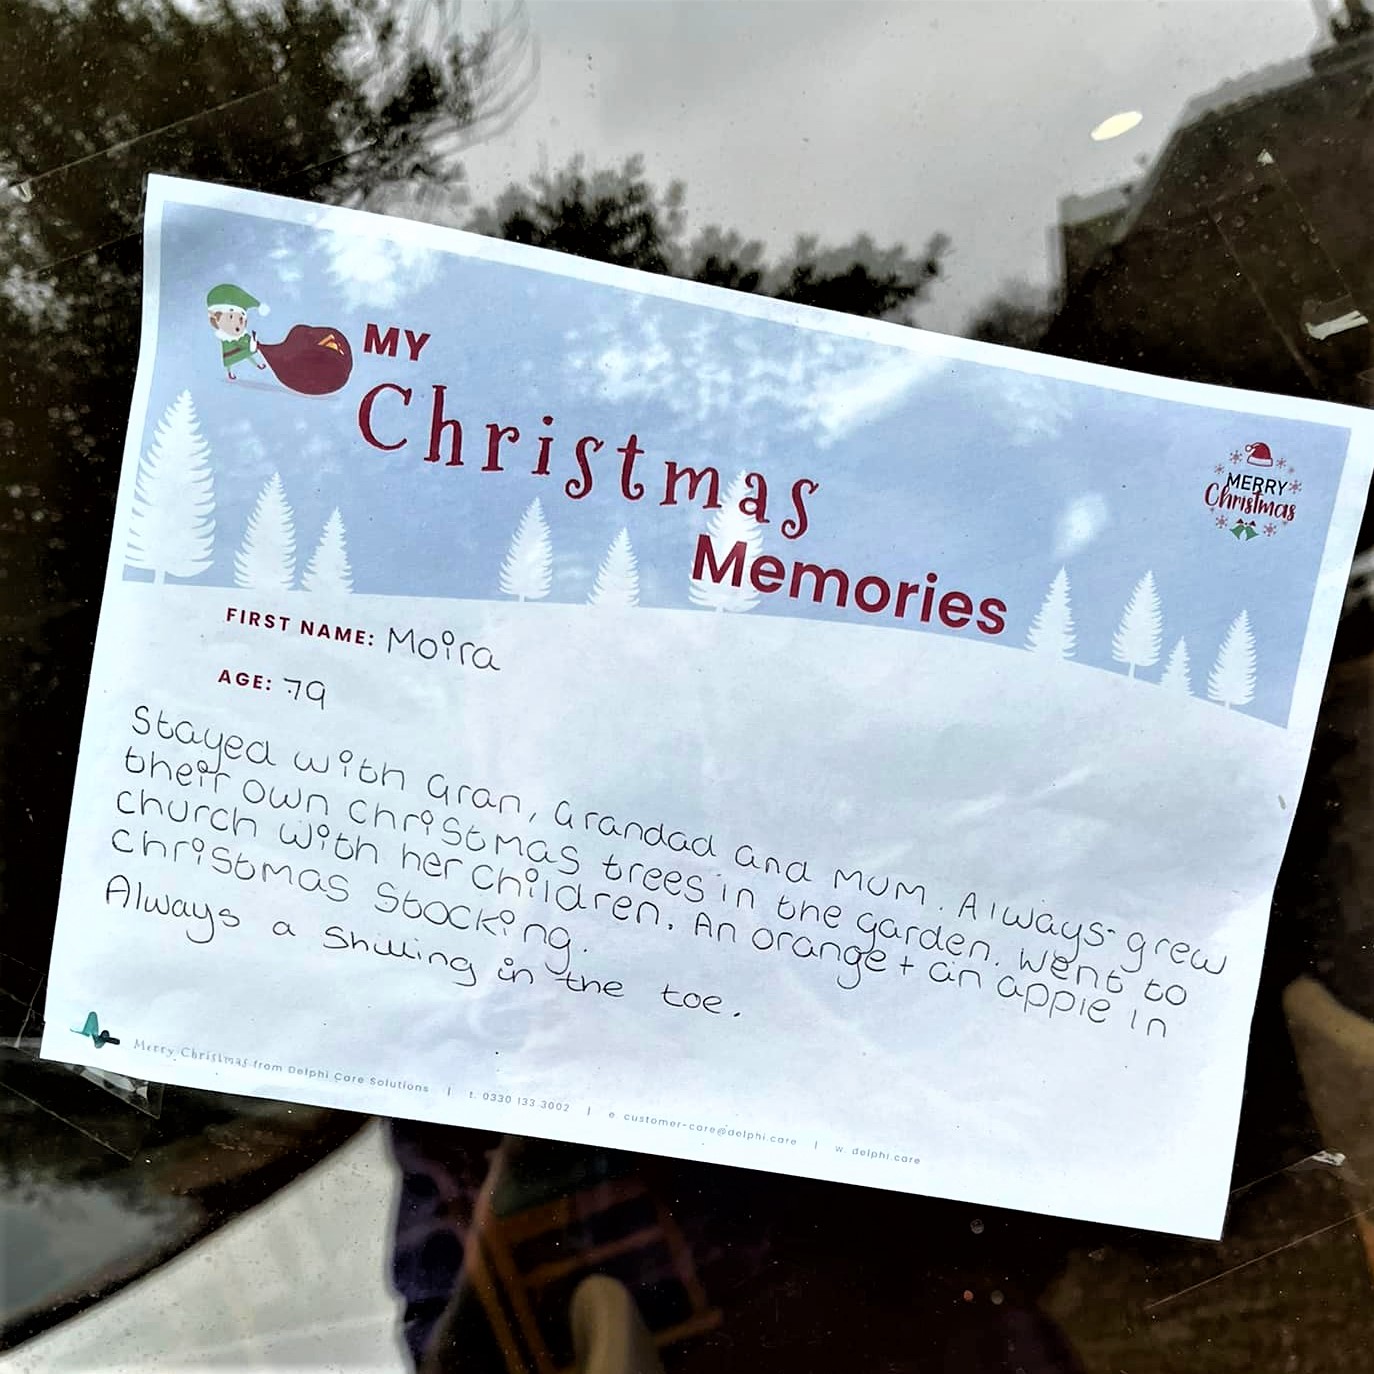 Balhousie resident Christmas memories written out